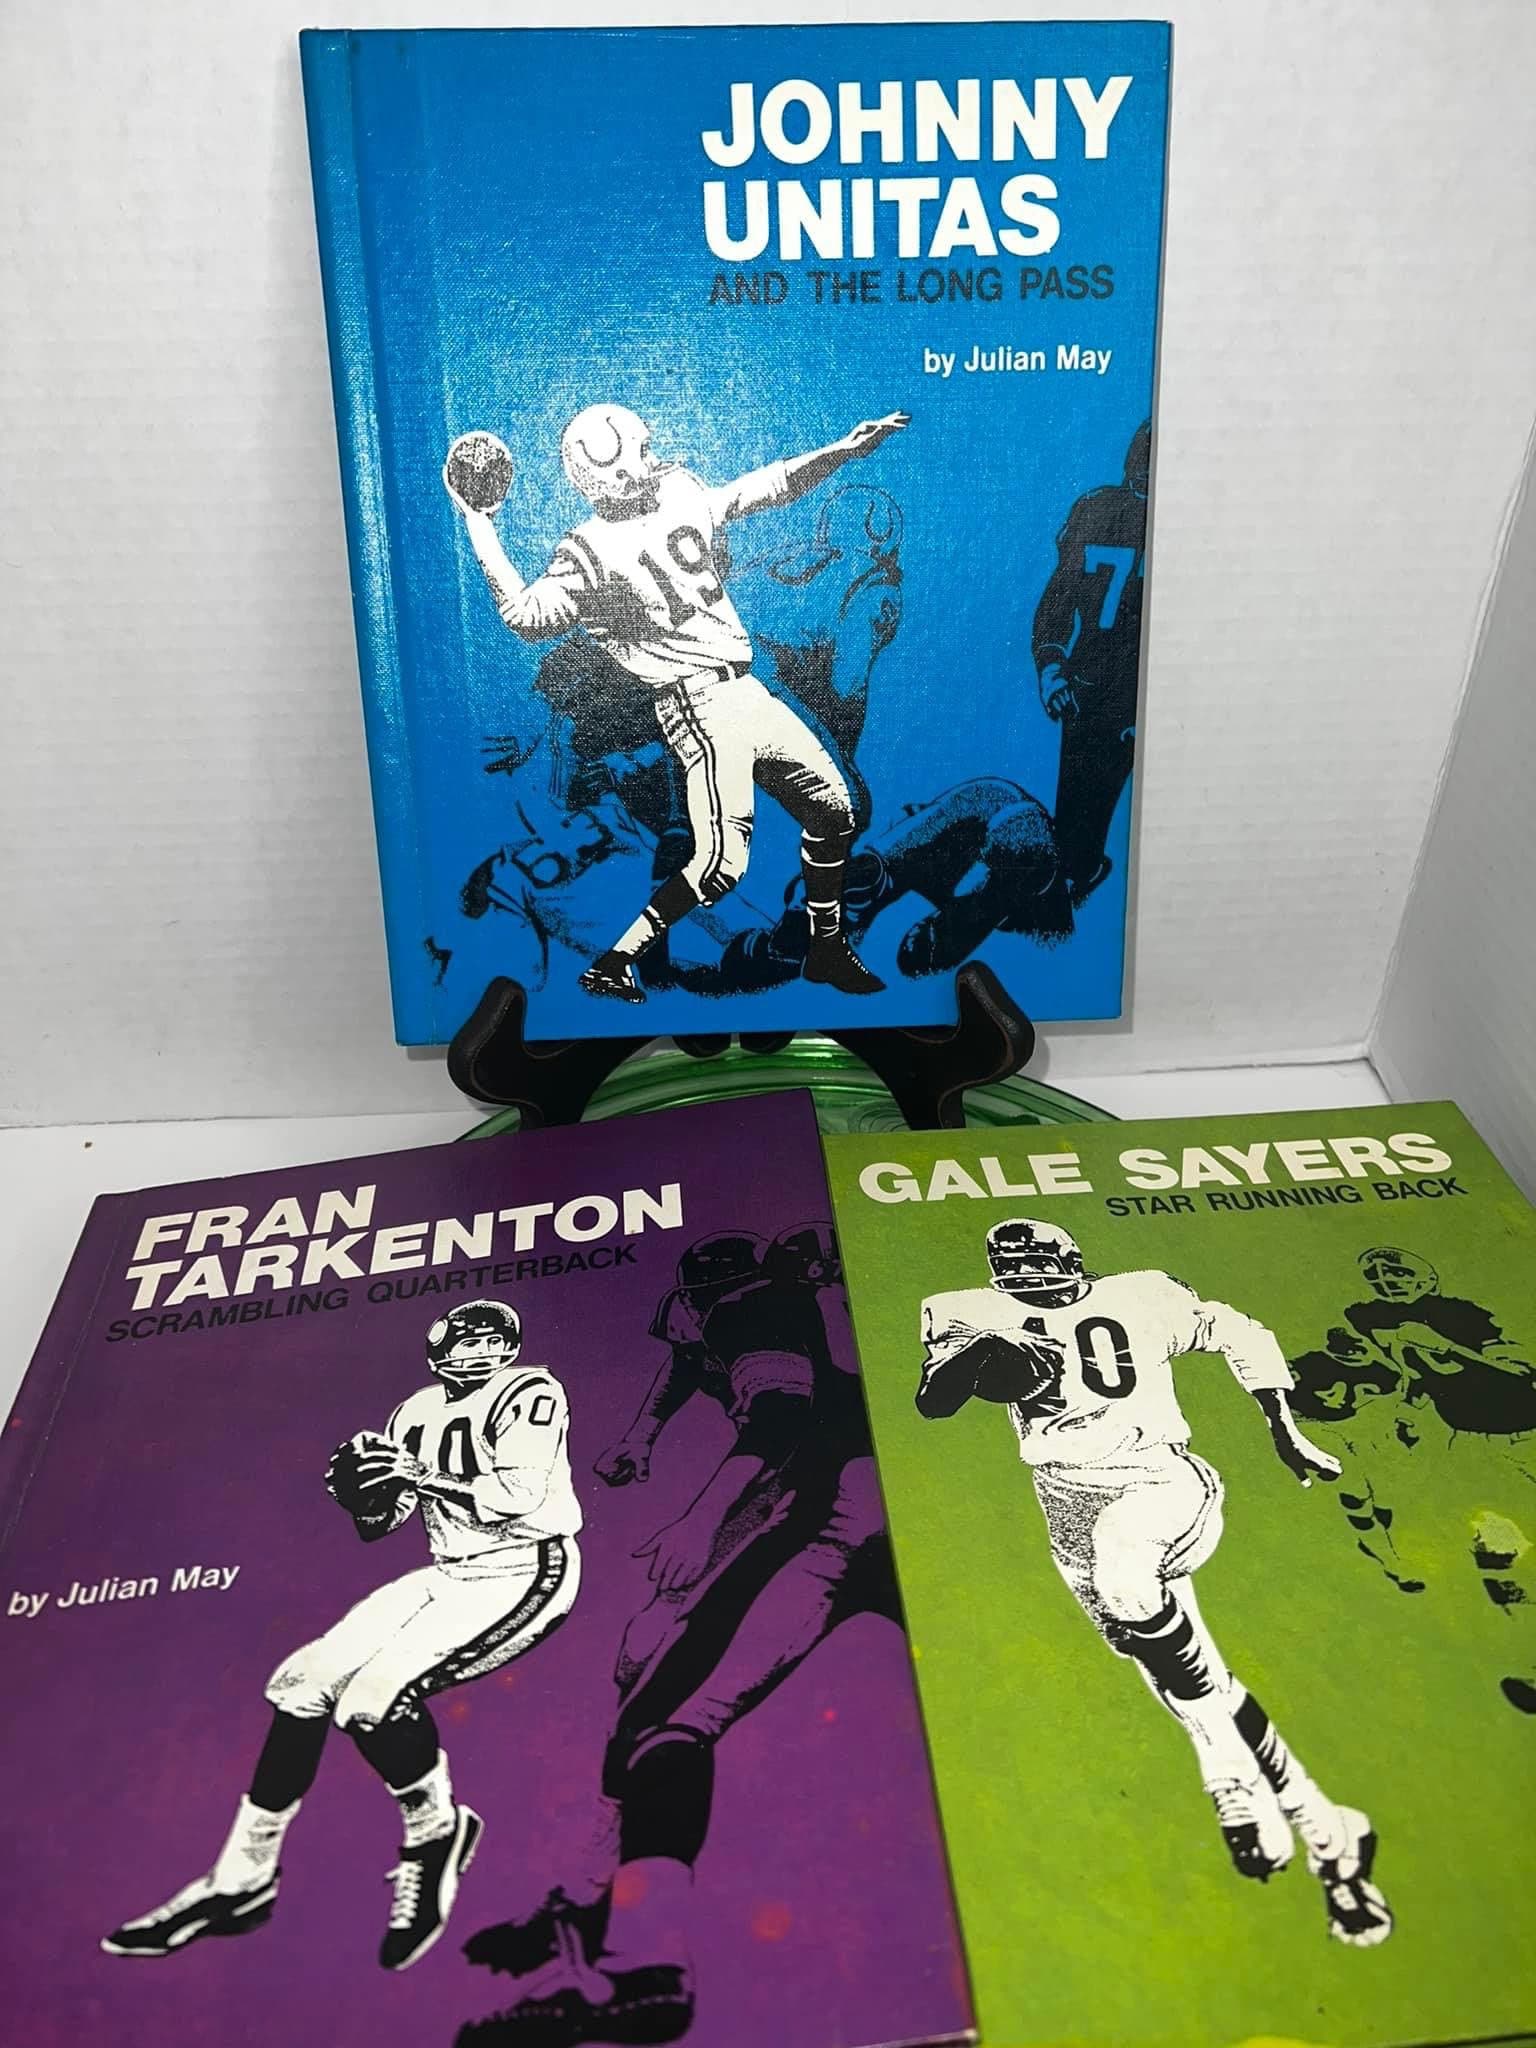 Vintage football books 1972,1973,1973 Johnny unitas, Frank tarkenton, gale sayers